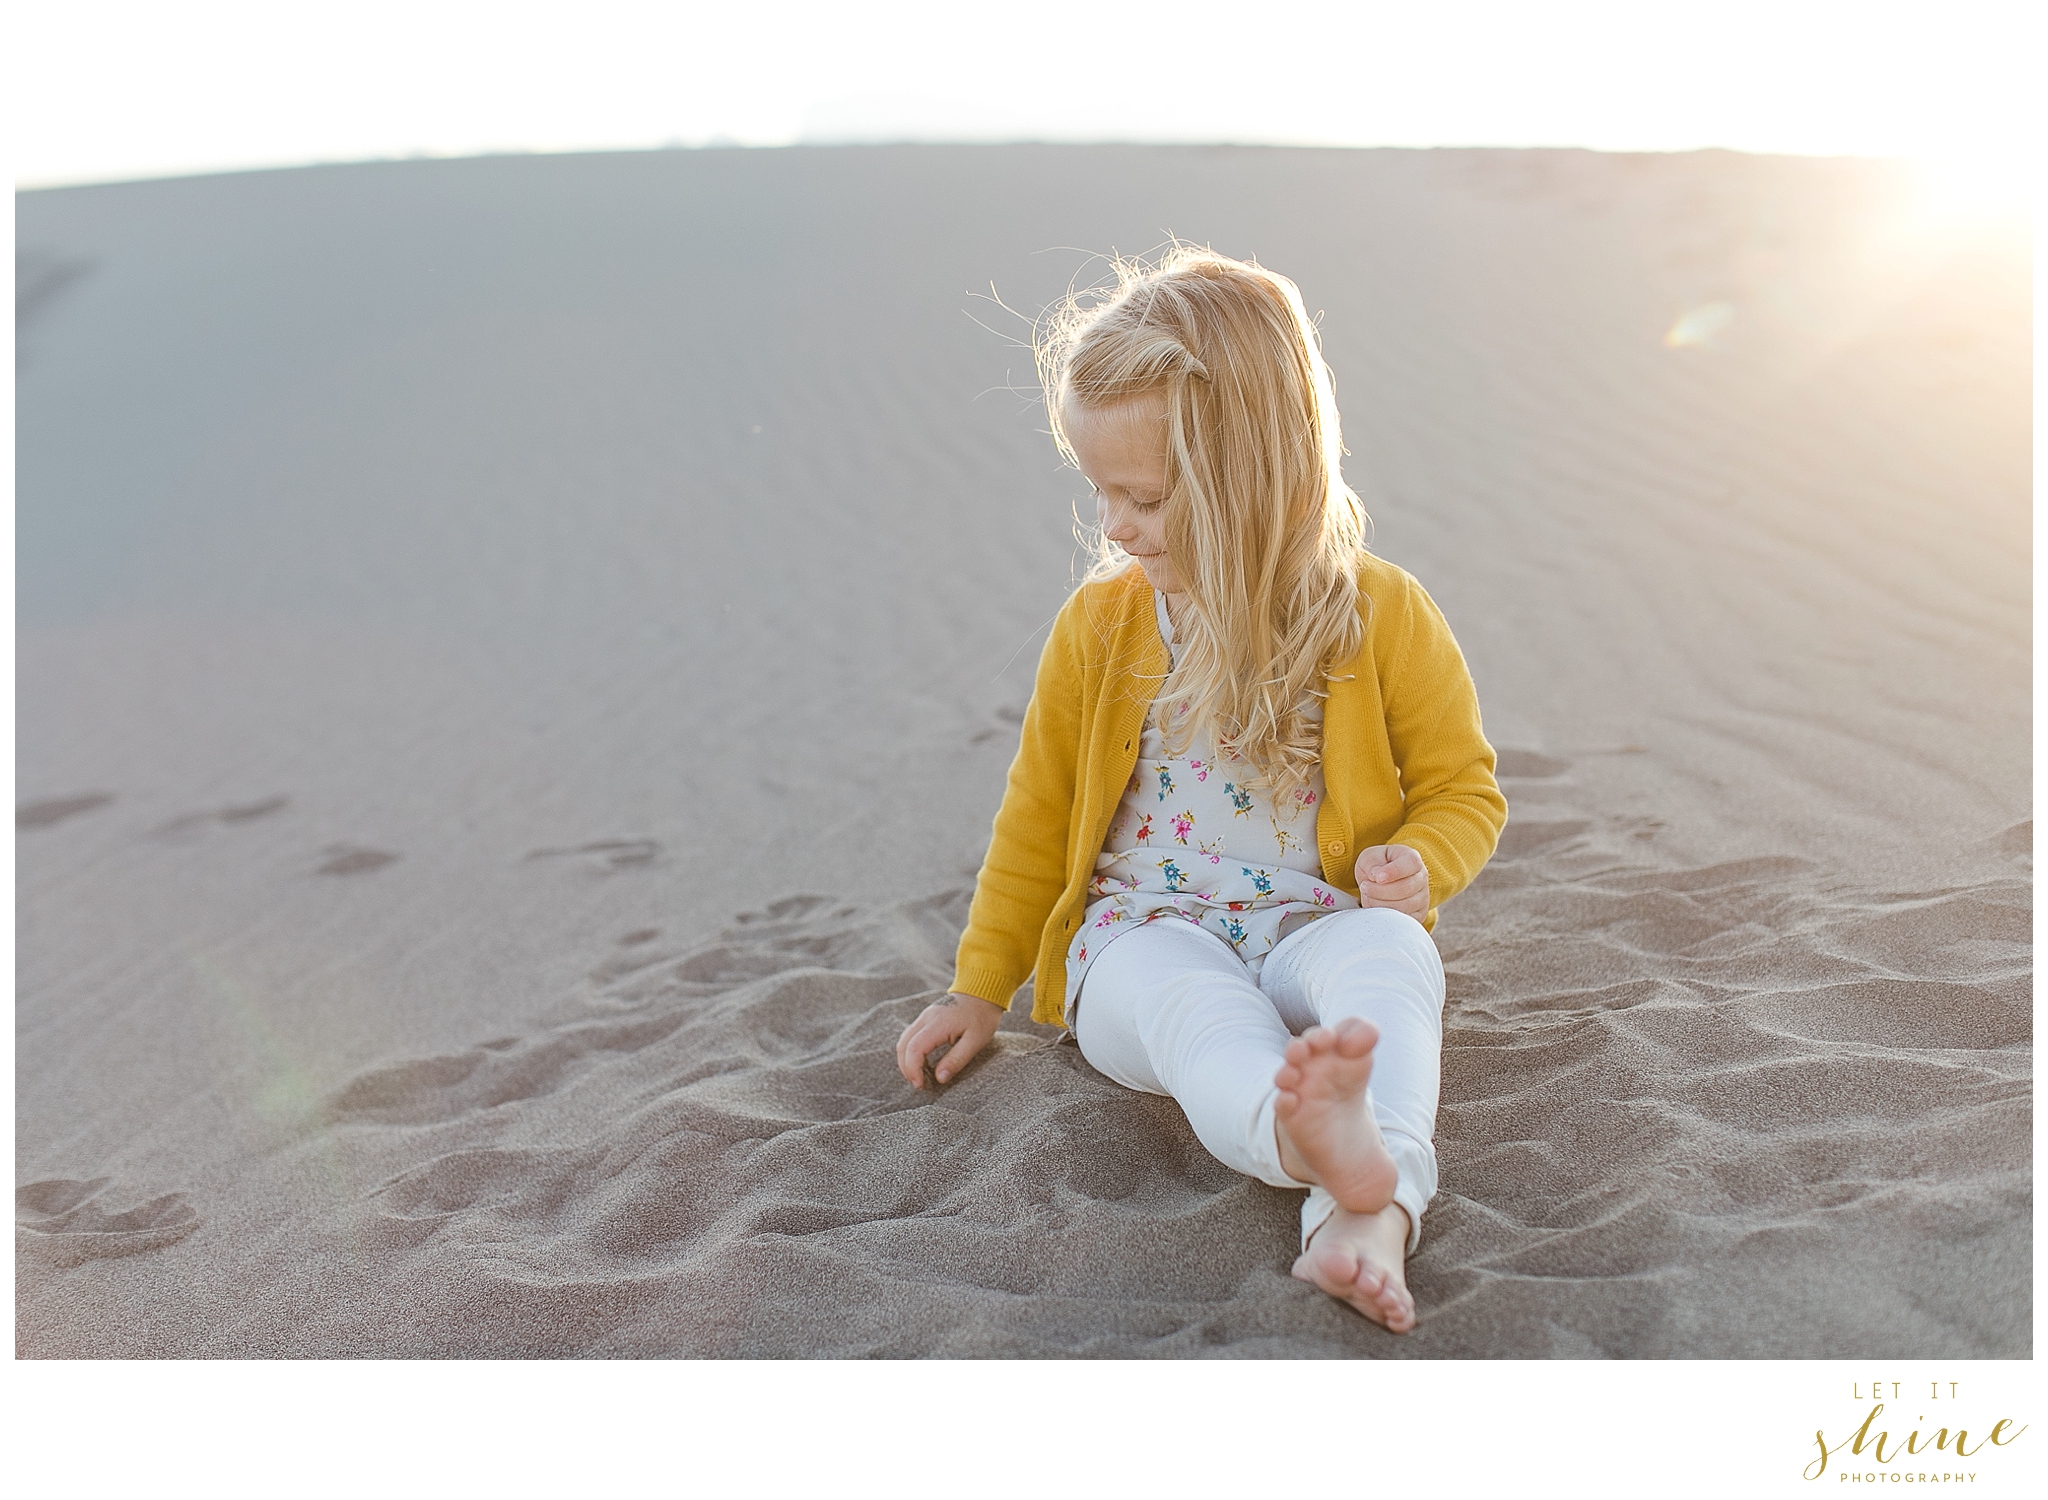 Bruneau Sand Dunes Family Session Let it shine Photography-5946.jpg